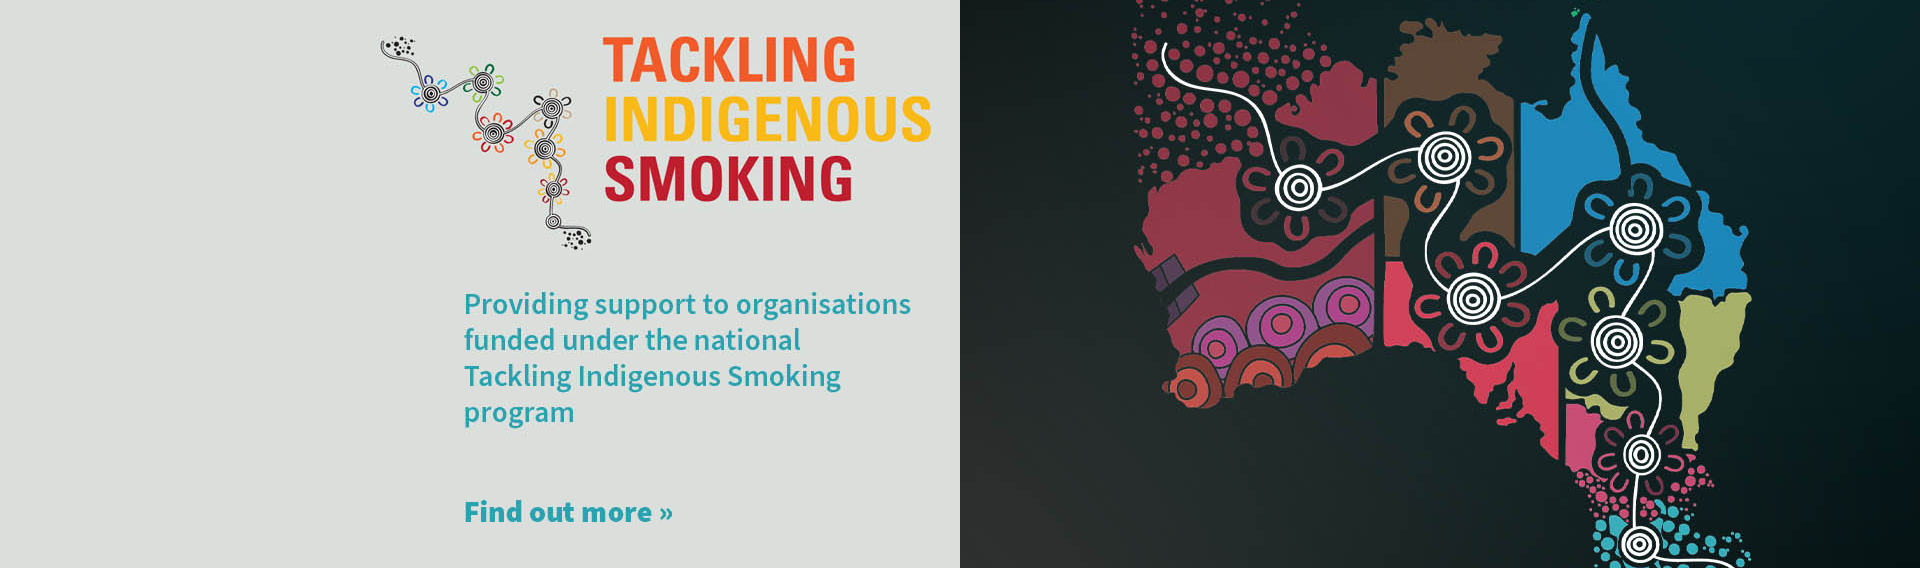 Tackling Indigenous Smoking